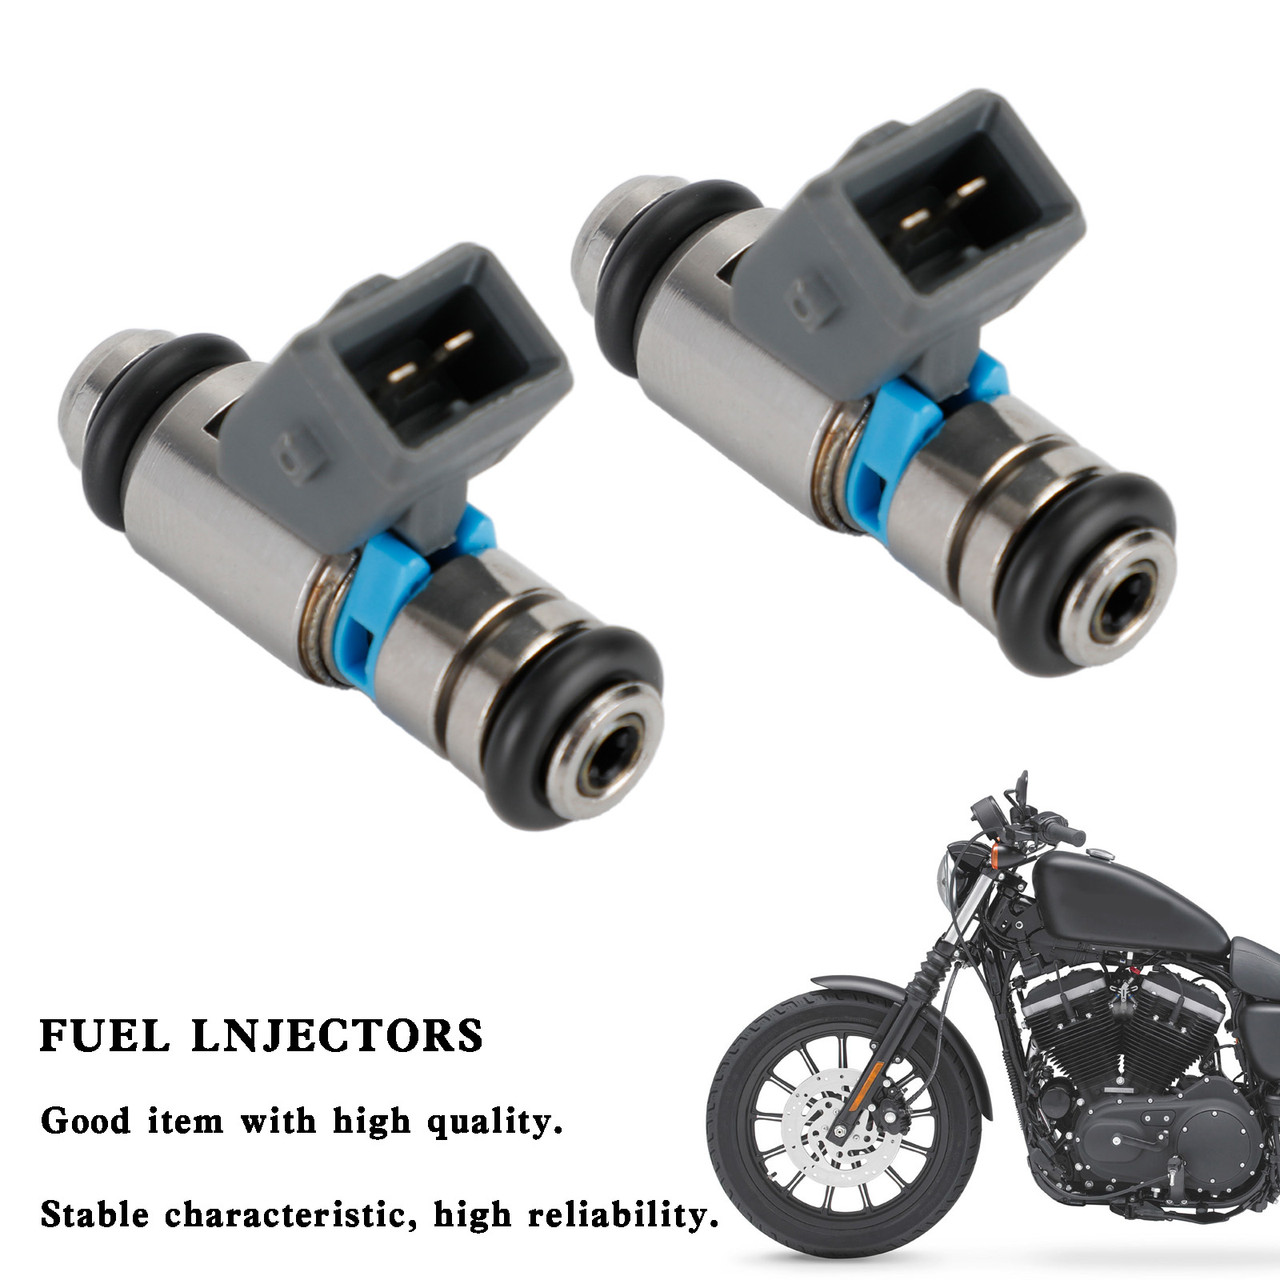 2PCS Fuel Injectors For Sportster Custom XL IWP181 27706-07A 994635-3731